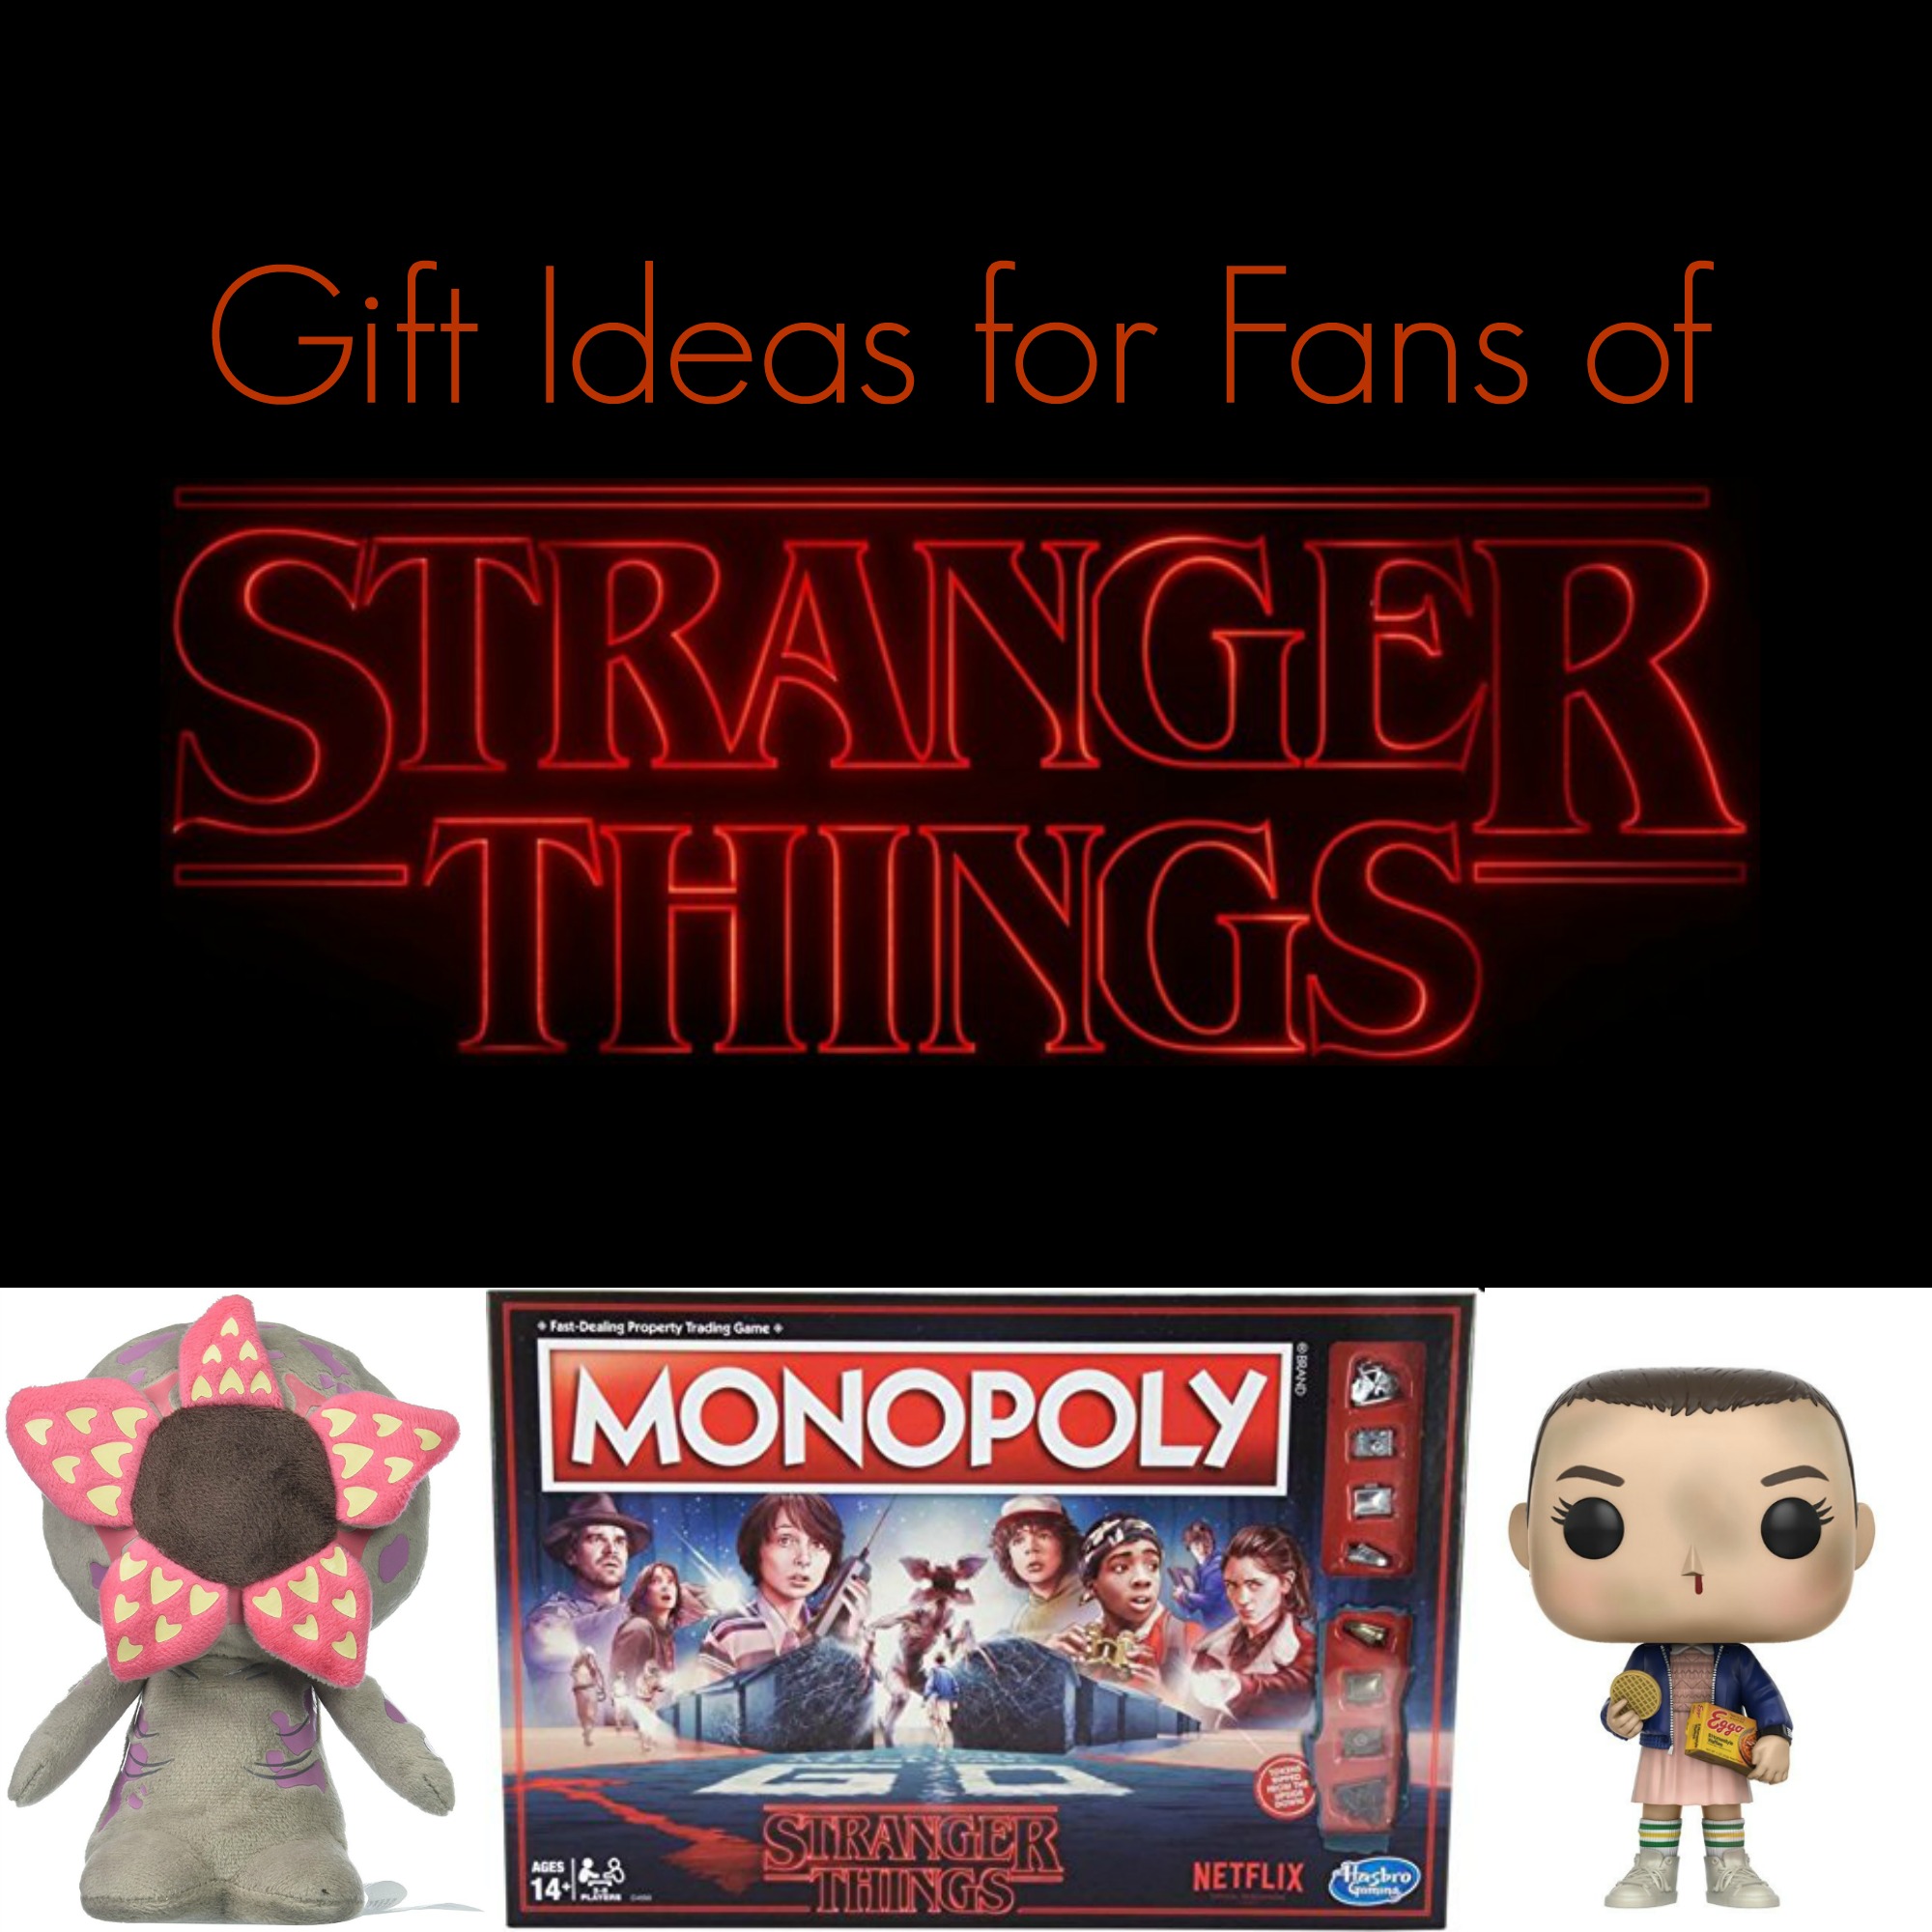 Stranger Things Gifts